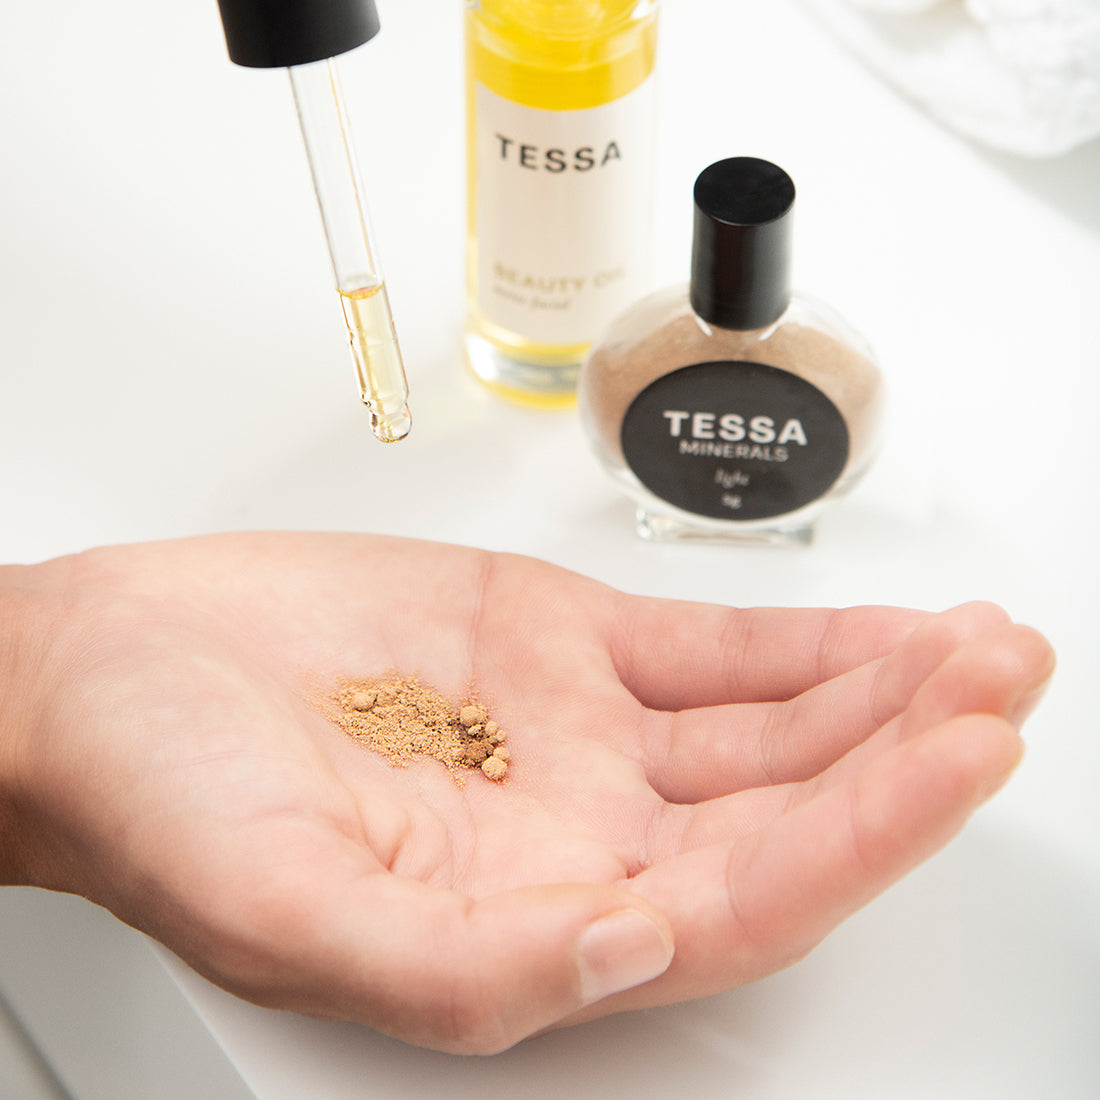 Pack de Maquillaje con Beauty Oil y Minerals Light marca Tessa. Cosméticos naturales.